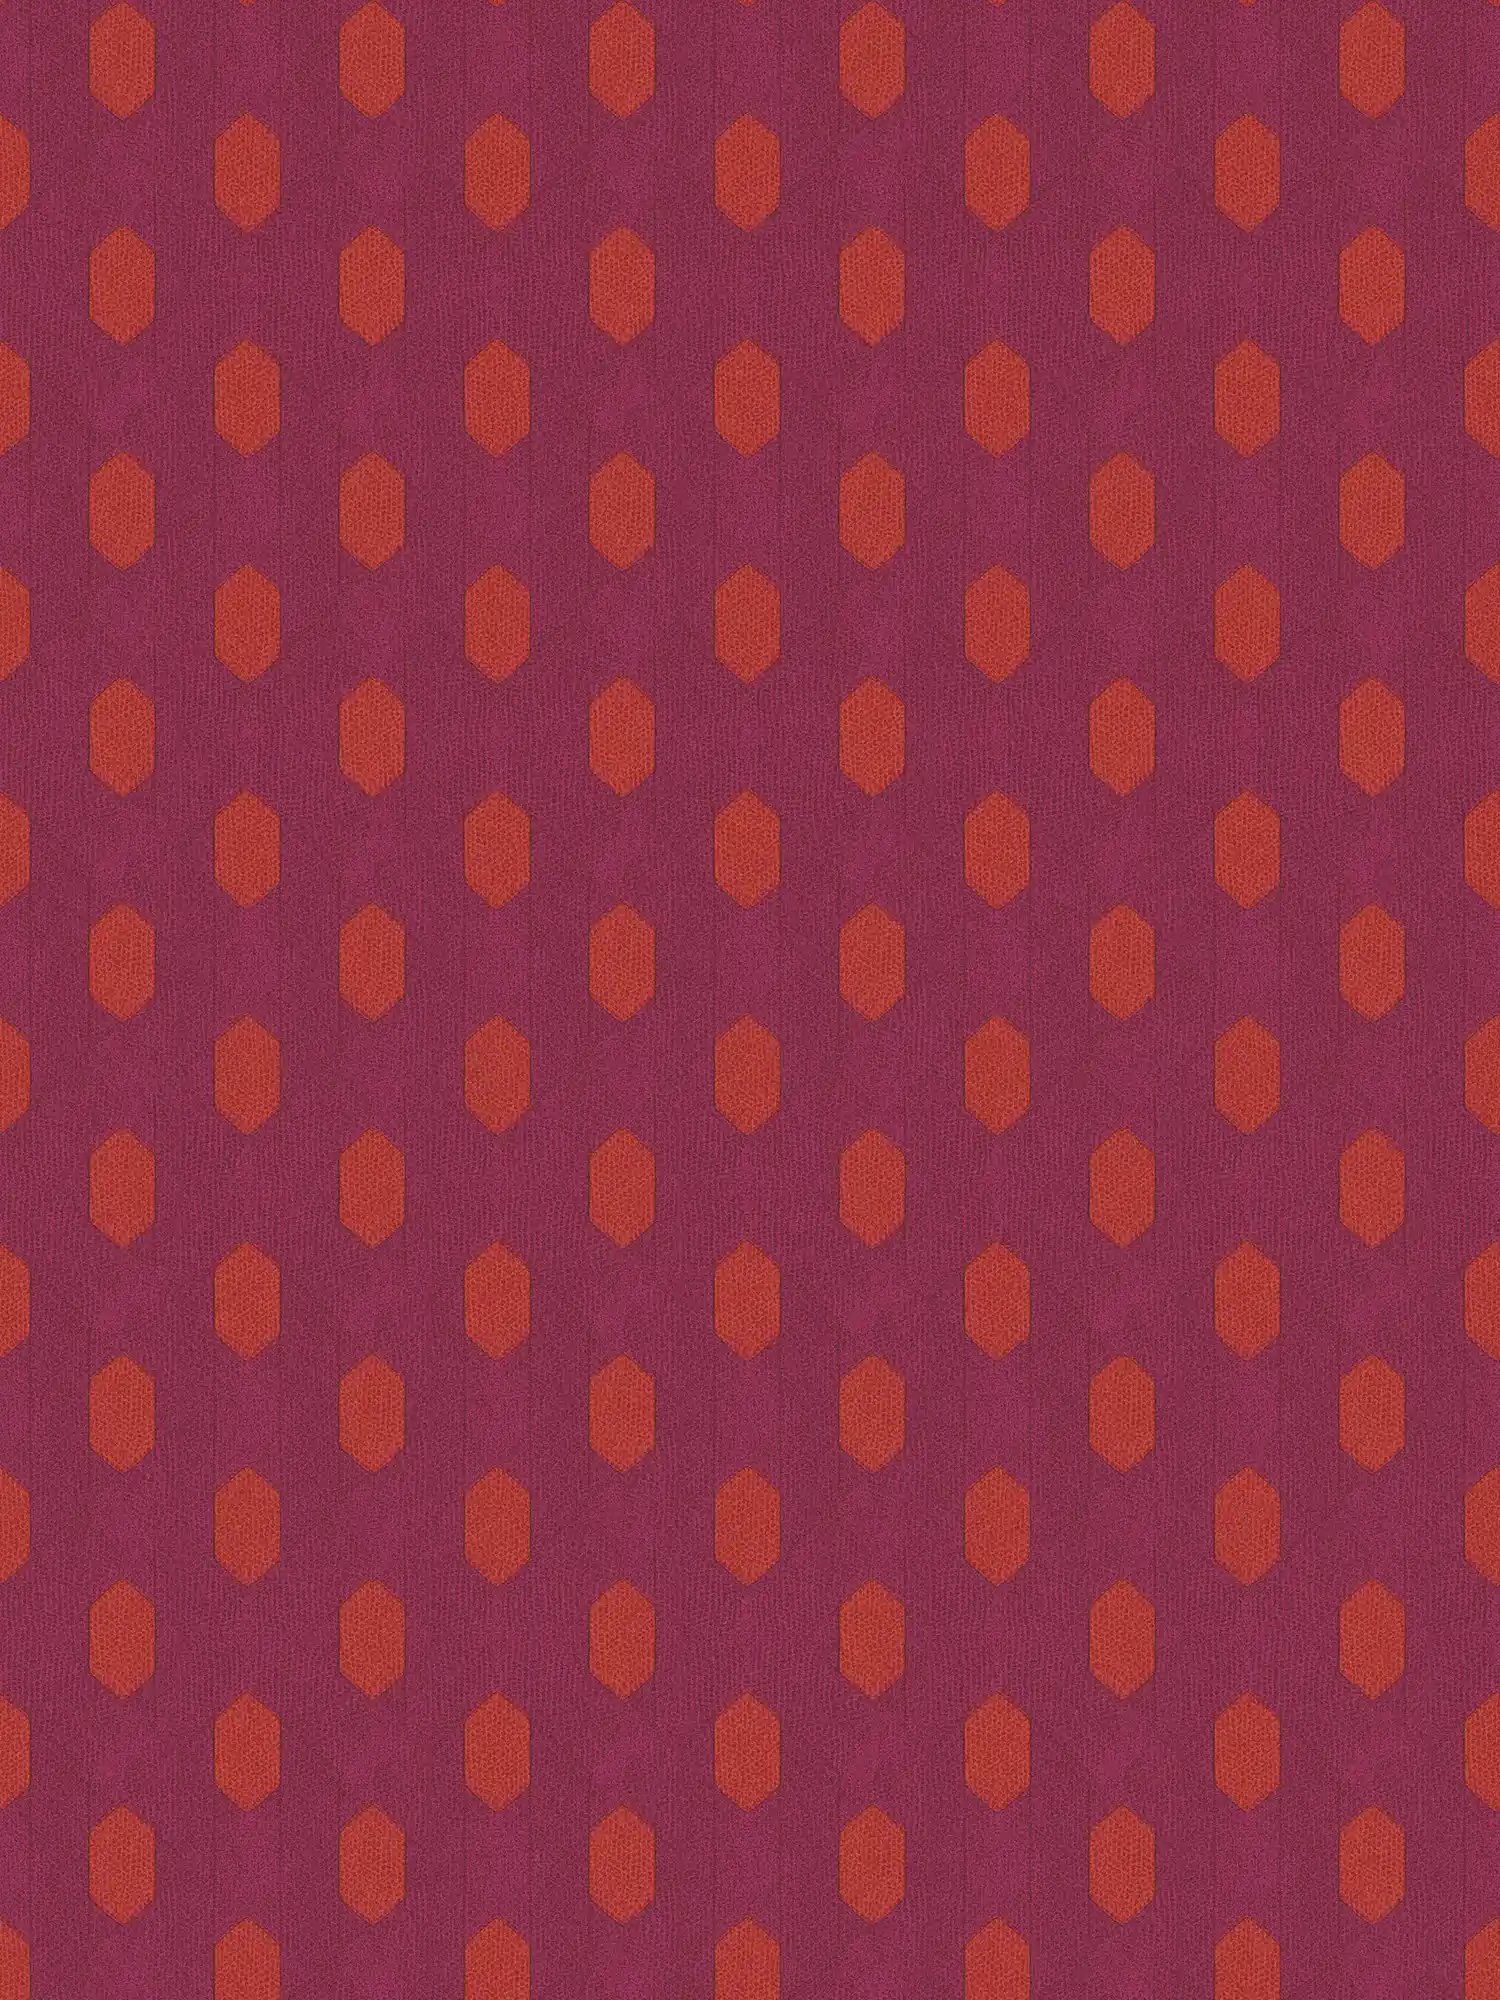 Magenta wallpaper with geometric pattern - purple, red, orange
